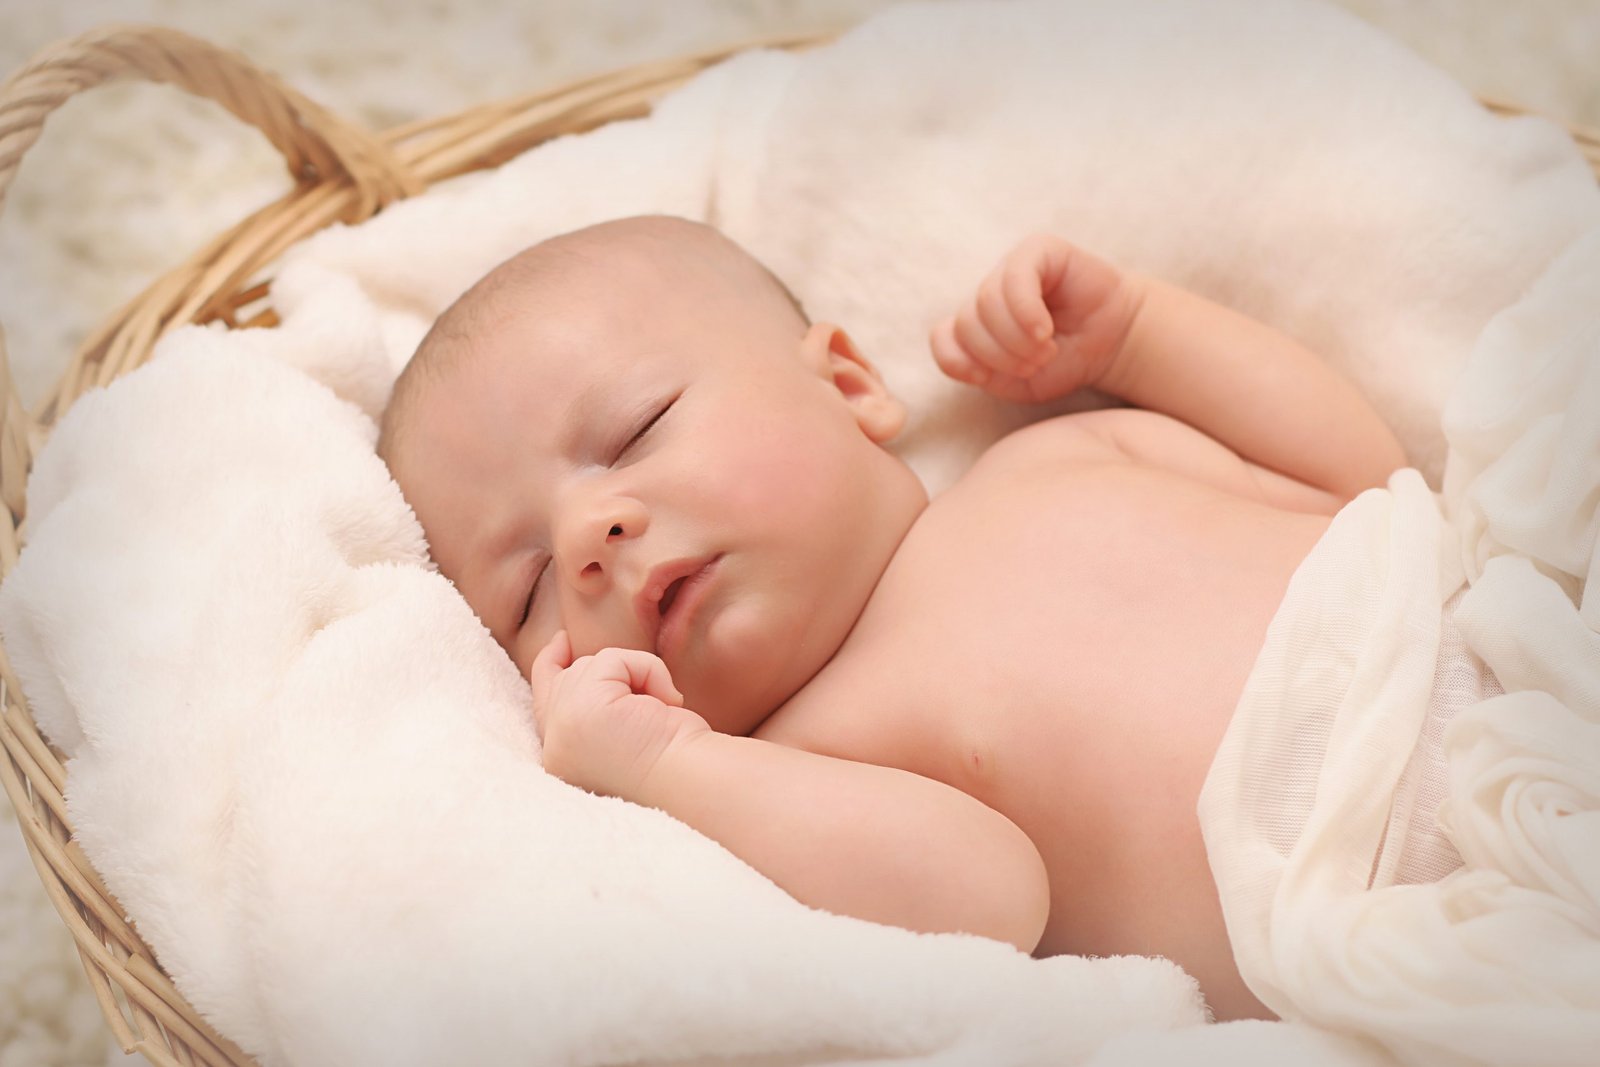 20 Adorable Baby Photoshoot Ideas